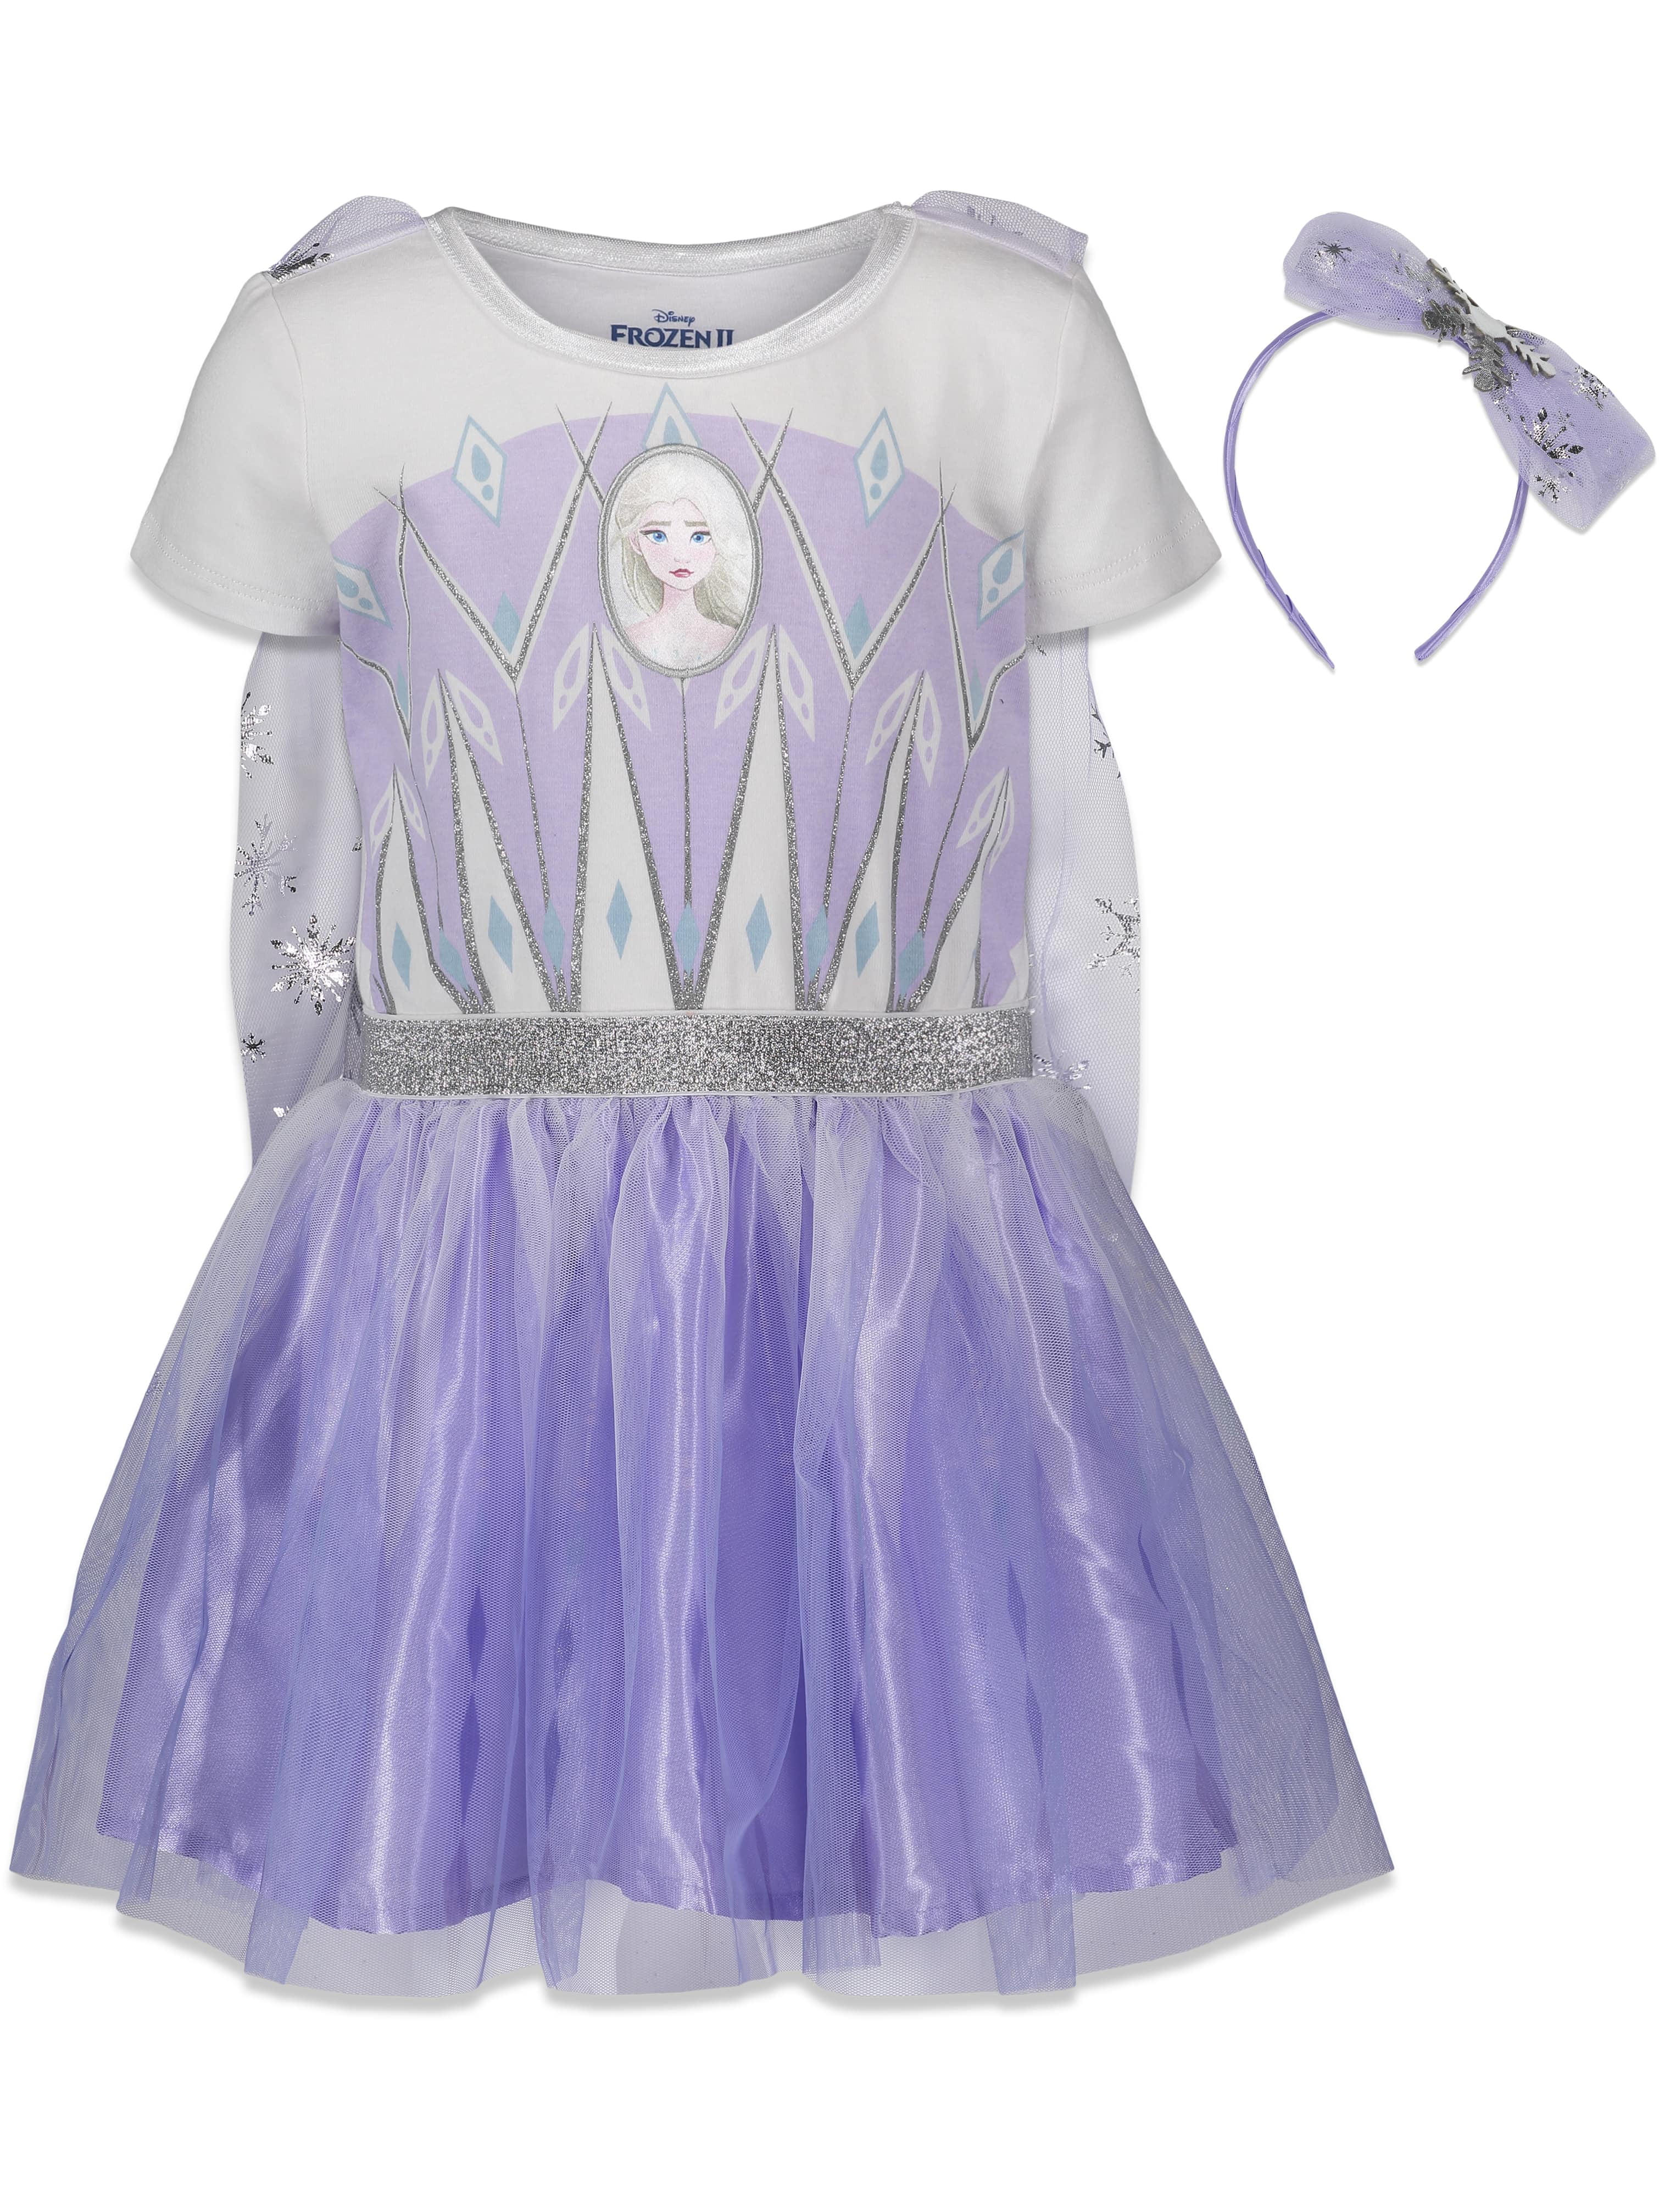 Disney Frozen 2 Elsa Anna Girls Short Sleeve Tule Tutu Party Dress Costume 3-8y 